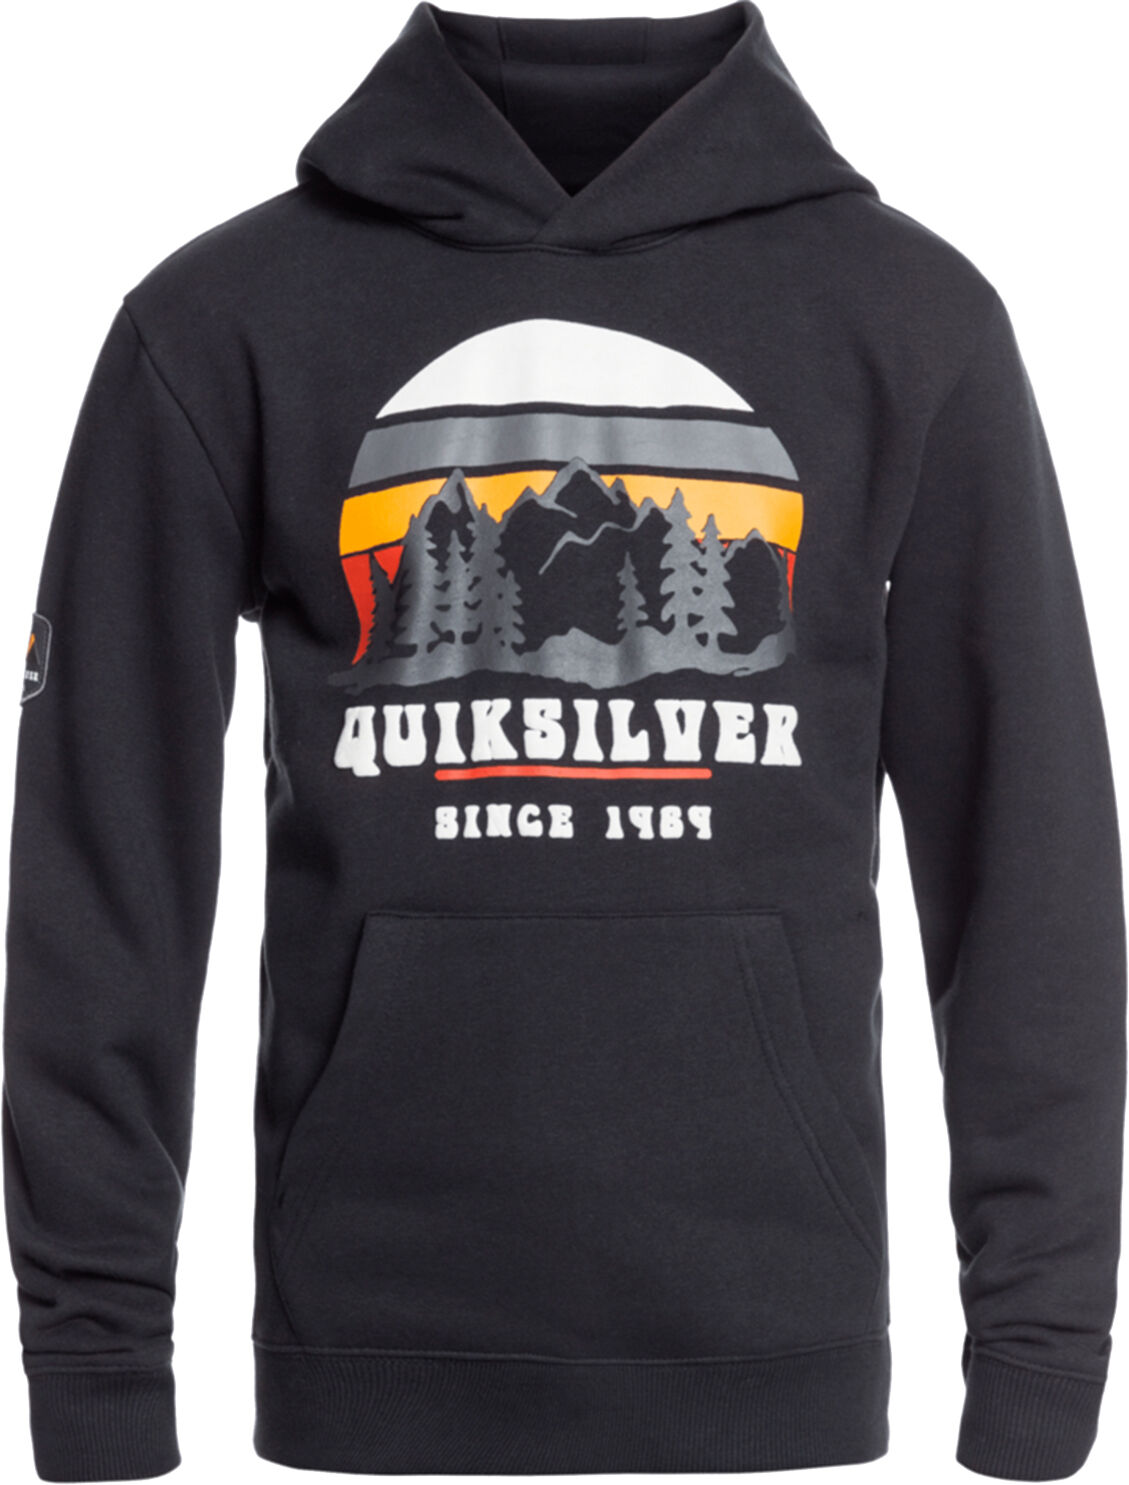 Quiksilver BIG LOGO SNOW YOUTH HOODED TRUE BLACK XS